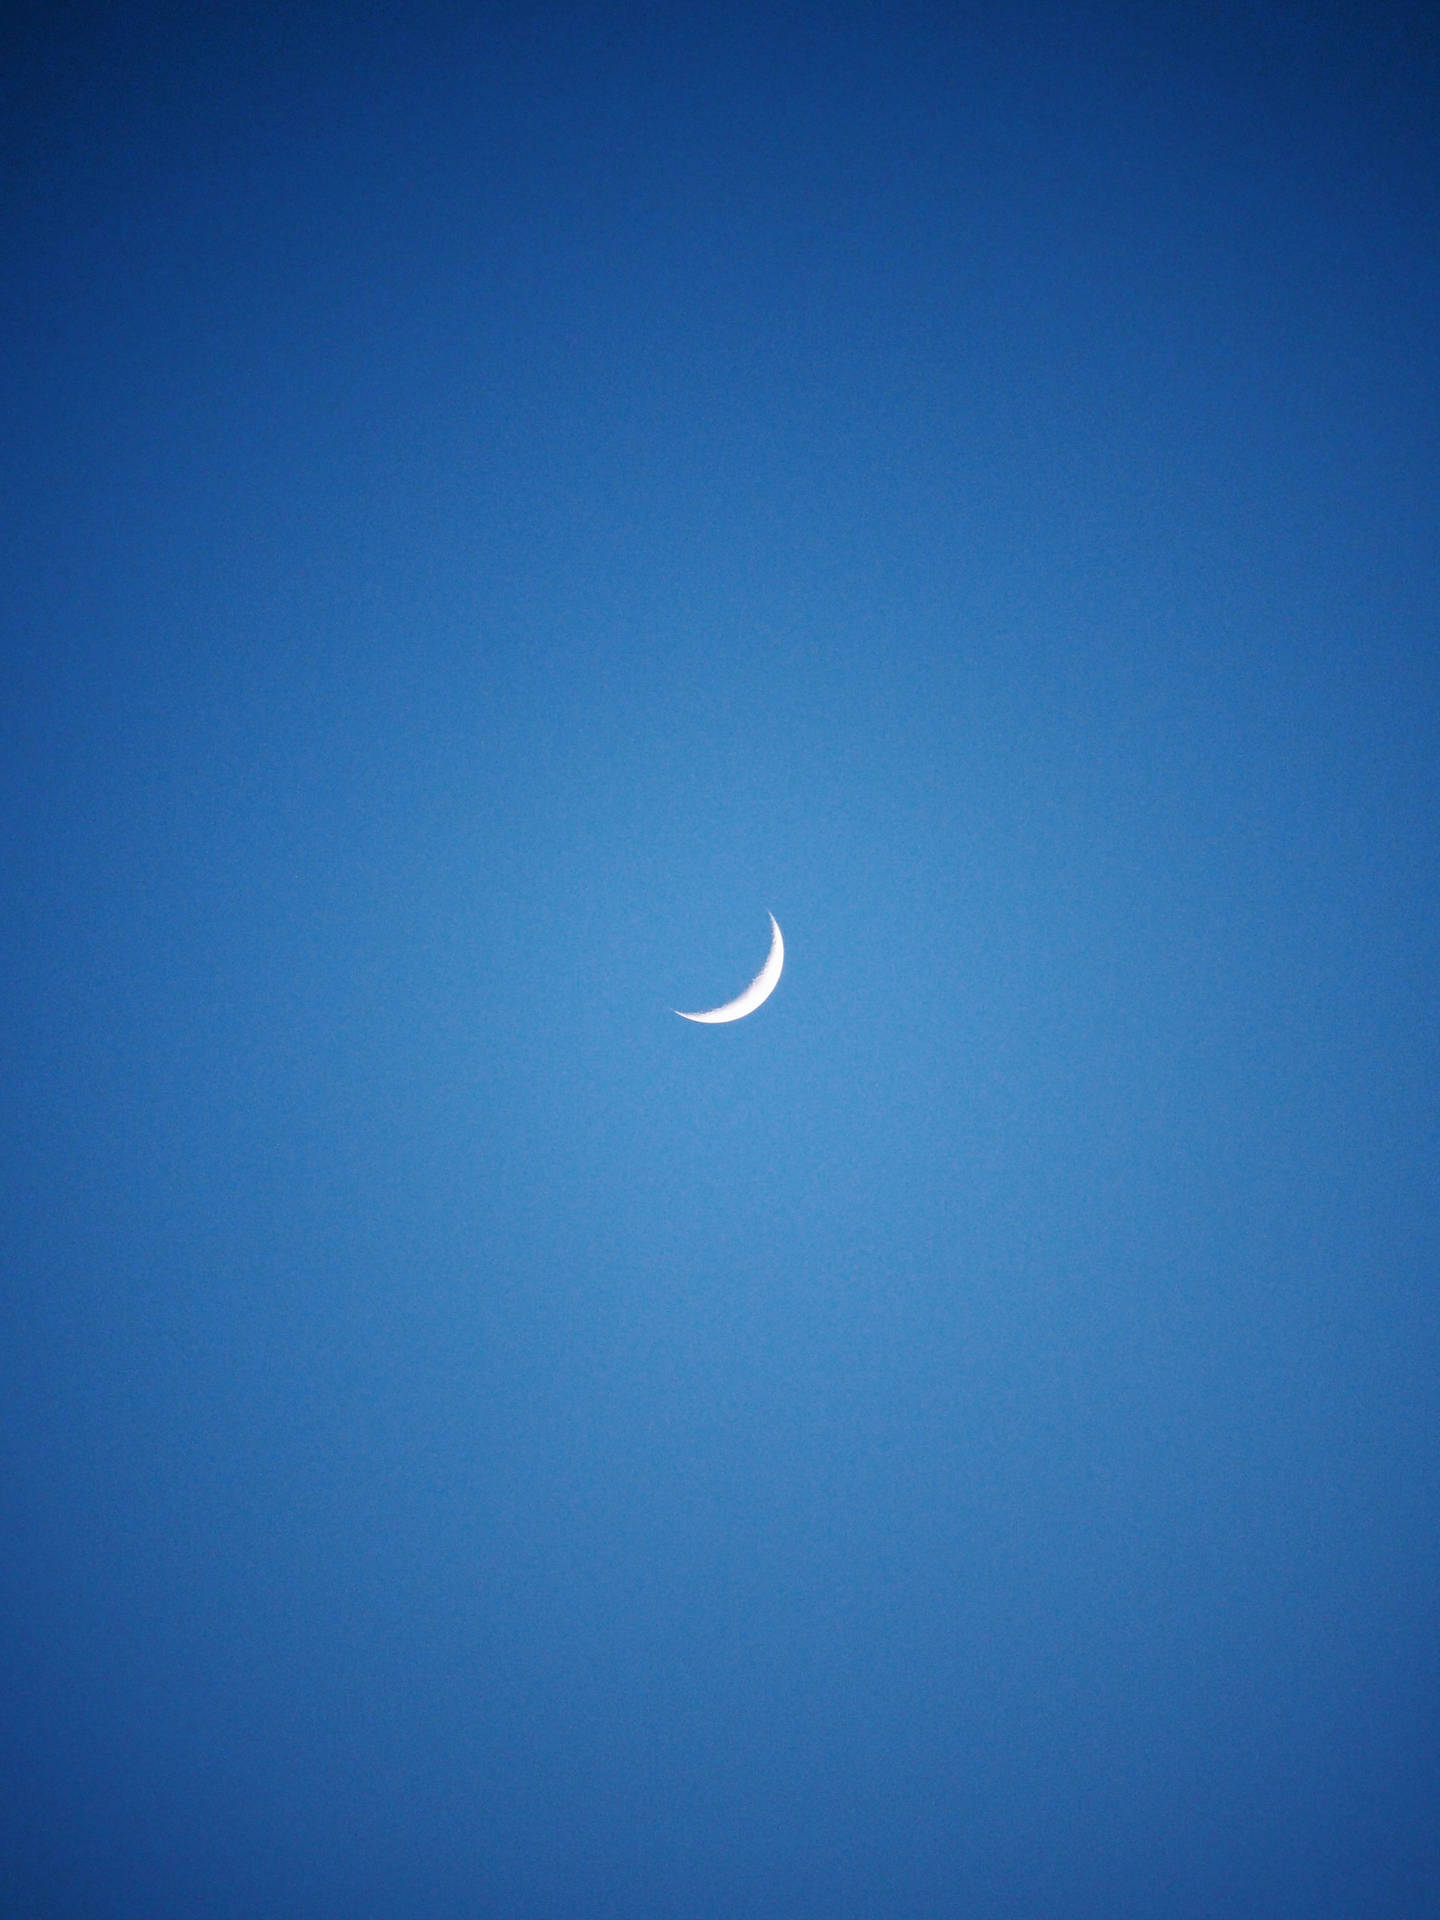 Dark Blue Sky And Crescent Moon